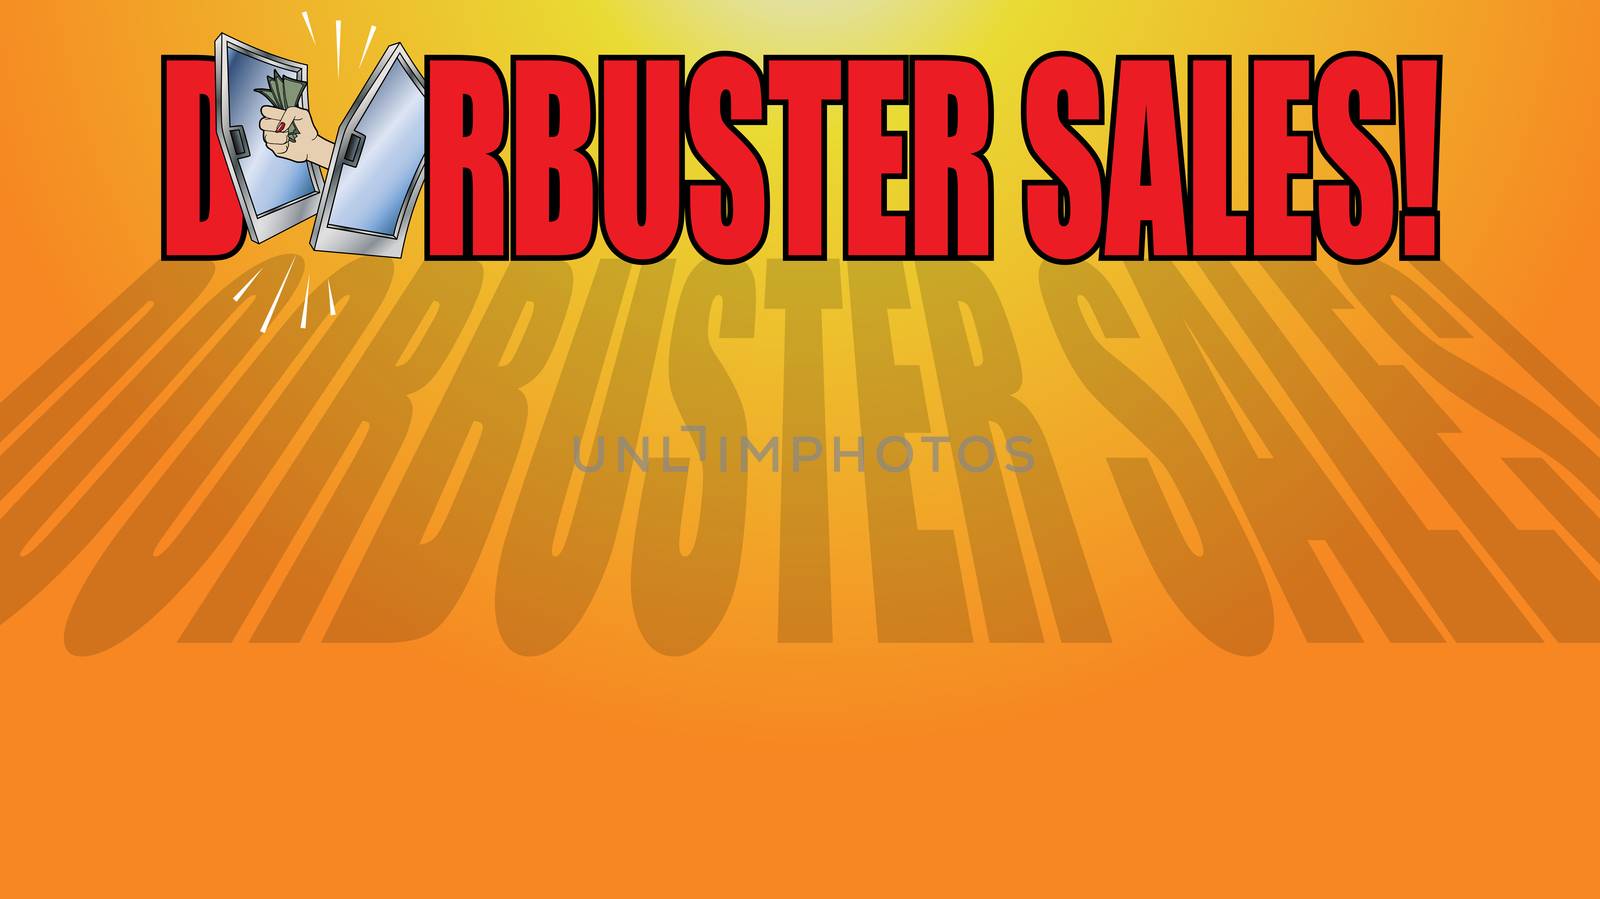 Doorbuster Sale Copy Logo on Orange Background by illstudio